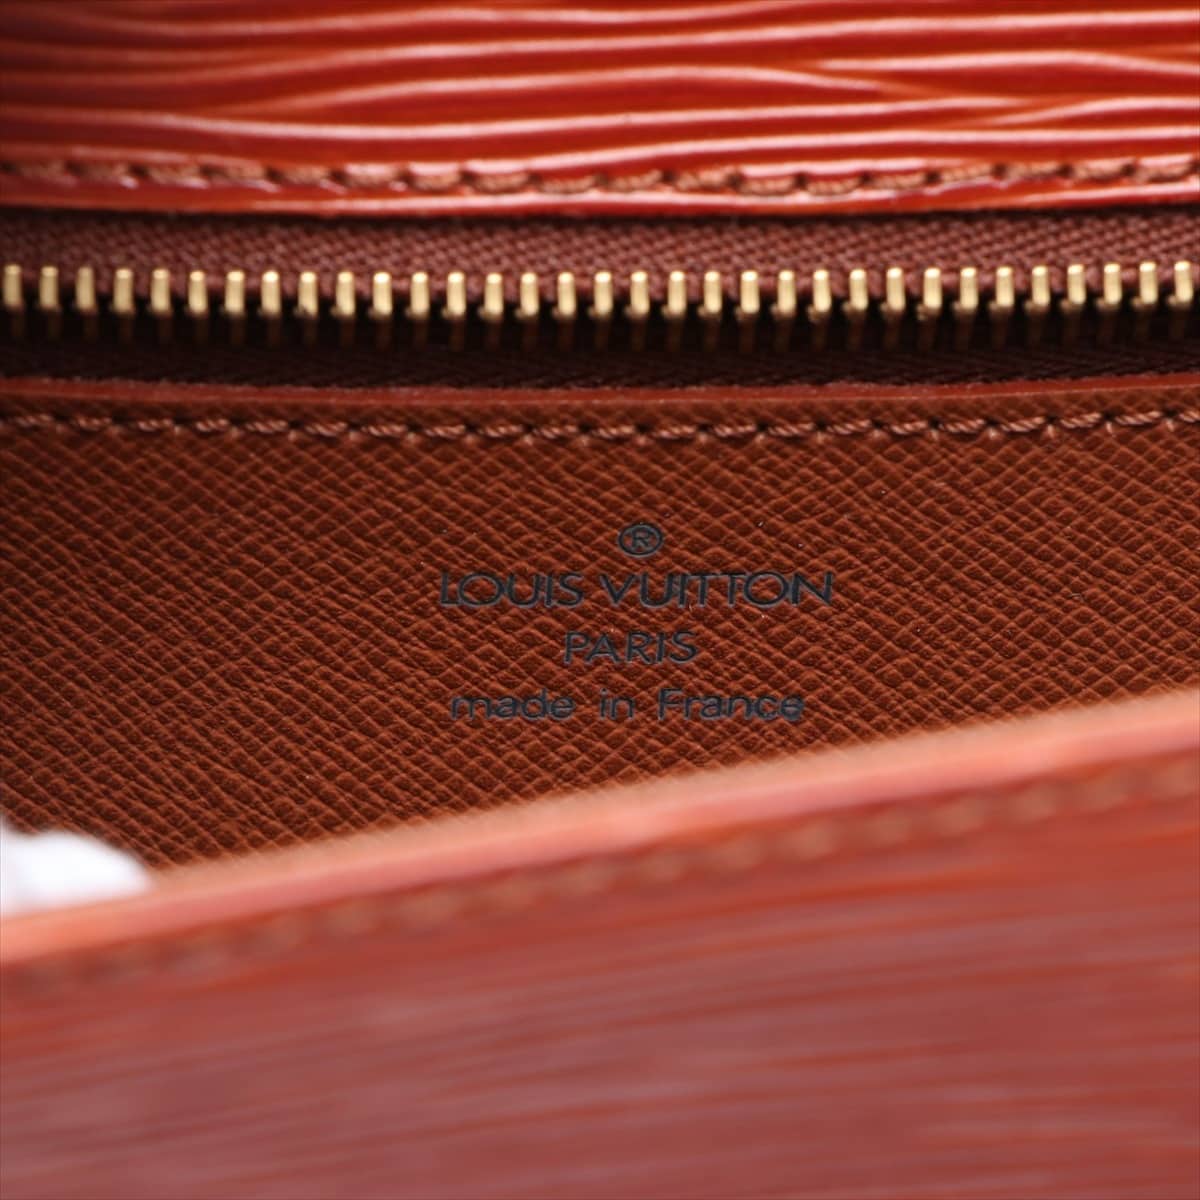 Louis Vuitton Epi Saint Cloud M52193 Kenya brown Pocket stubbets